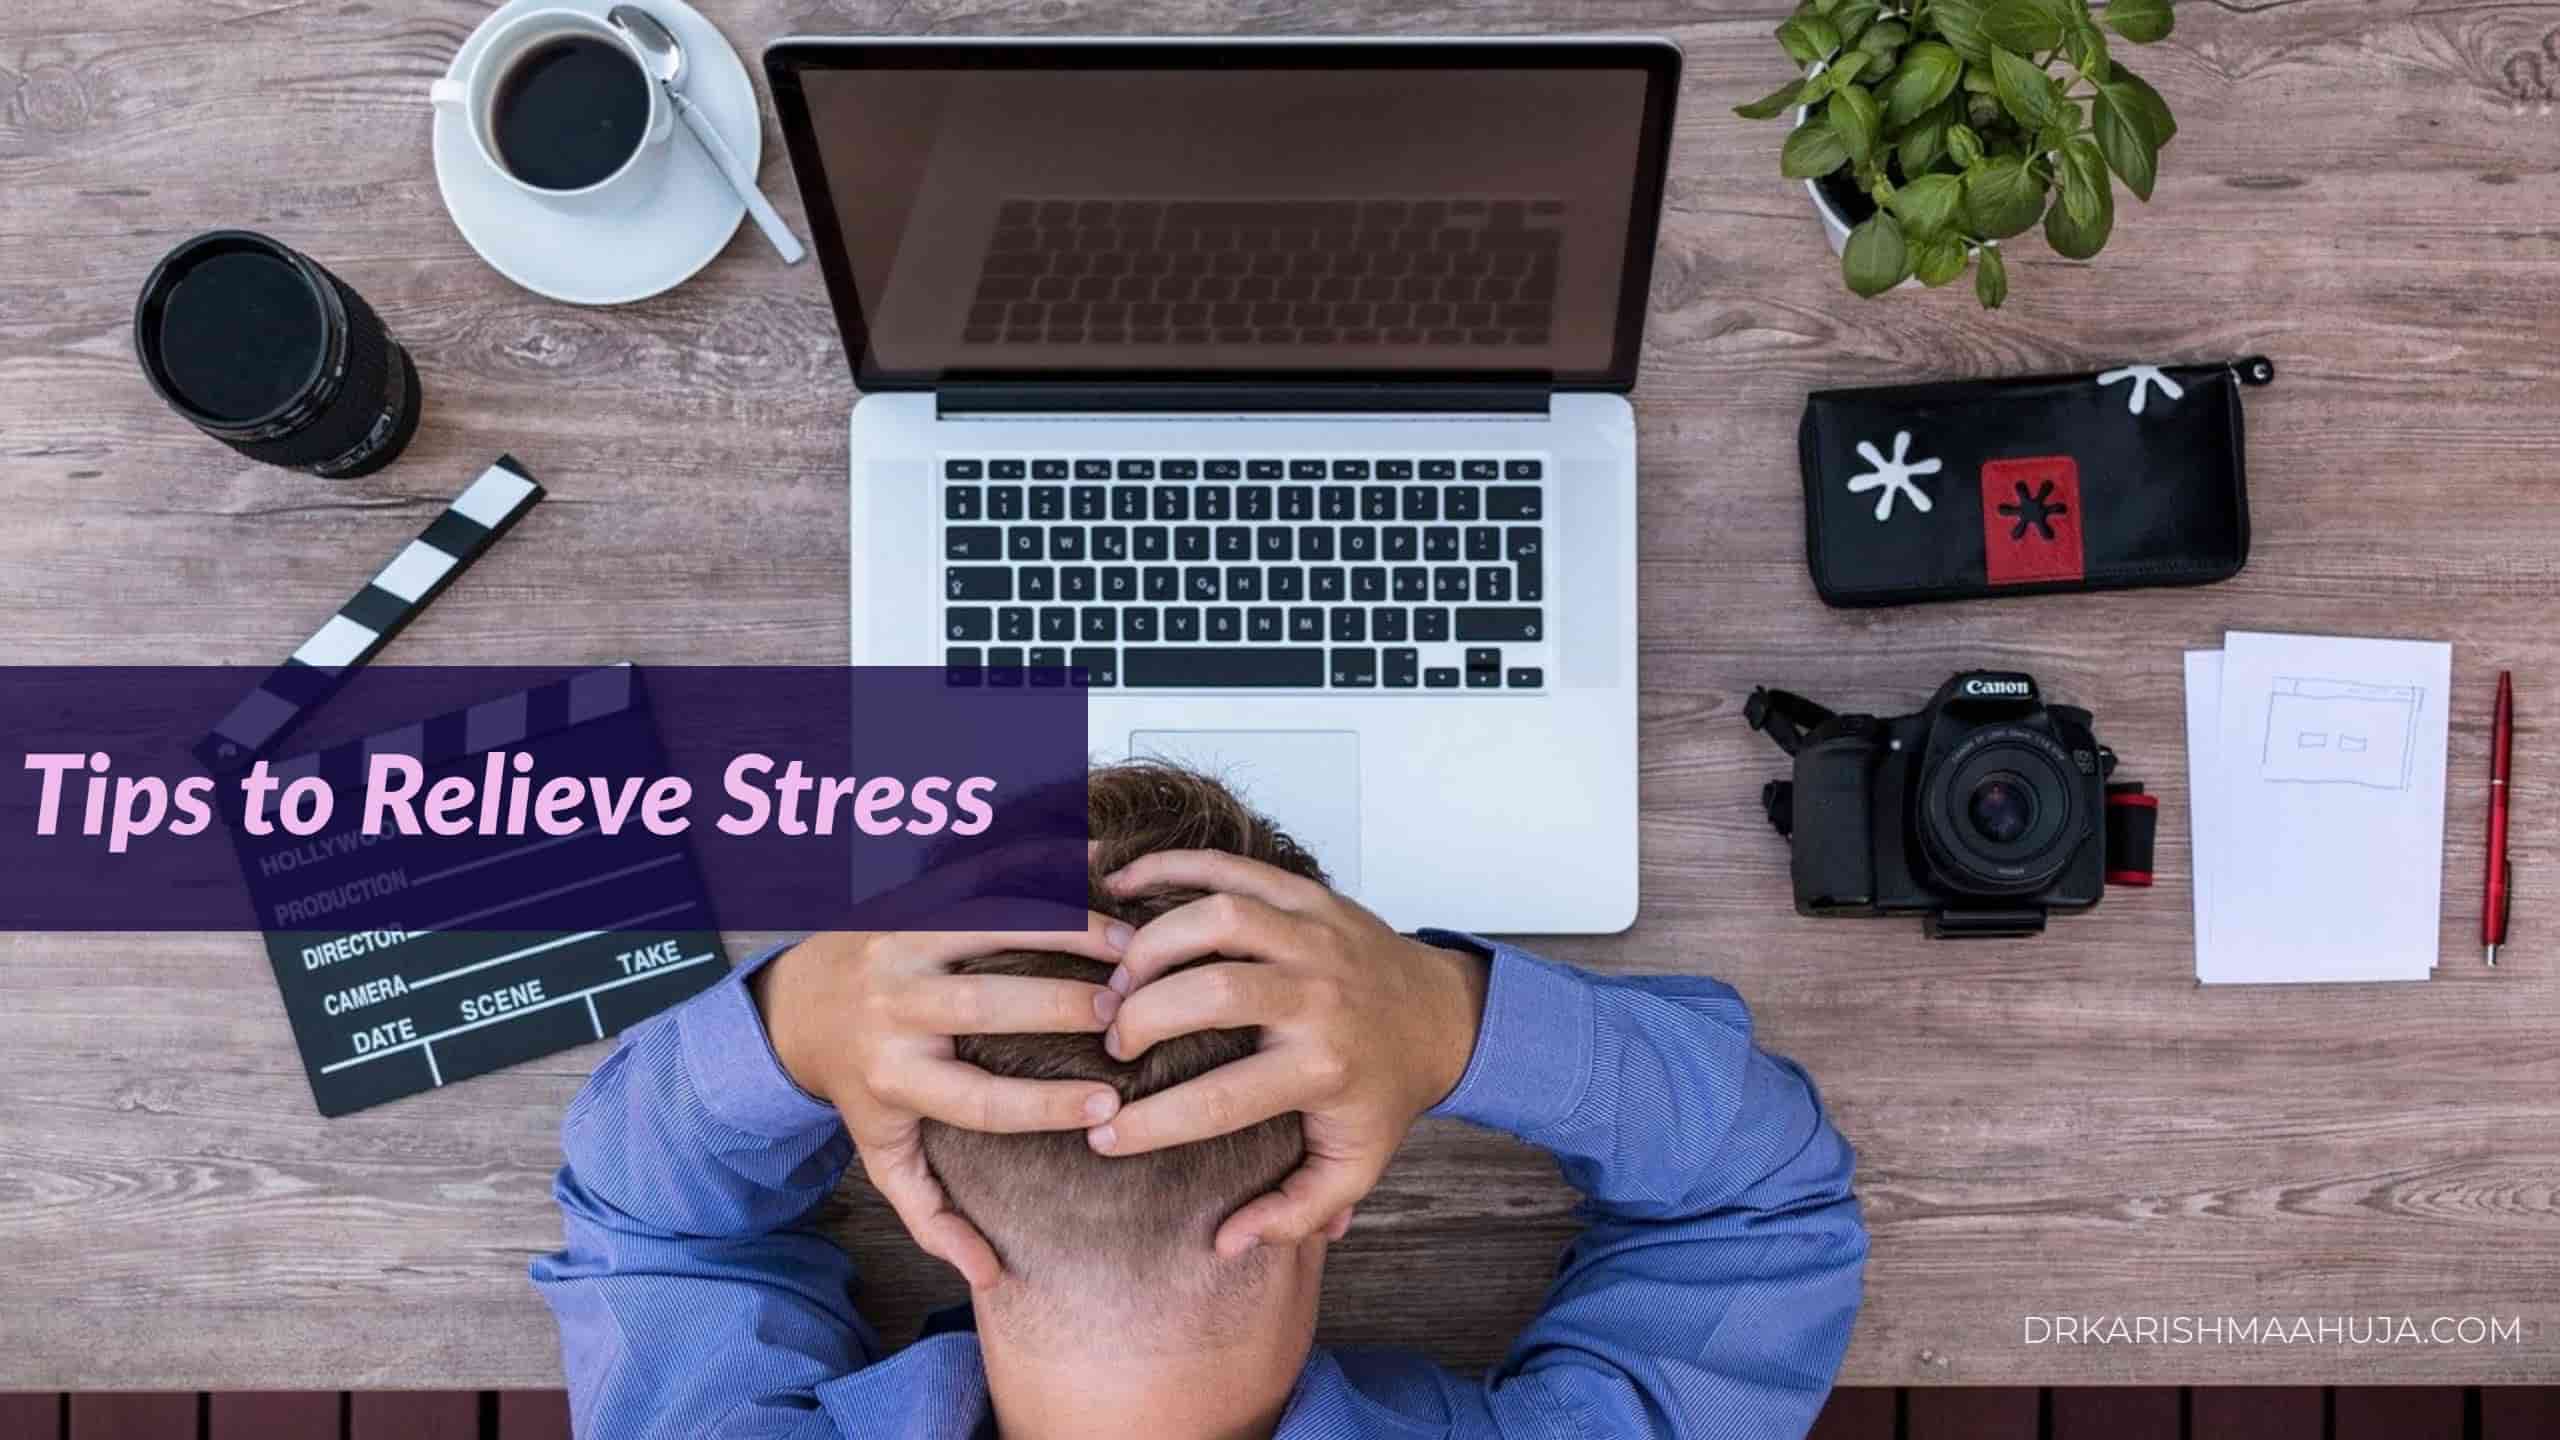 Quick & Powerful ways to Relieve Stress